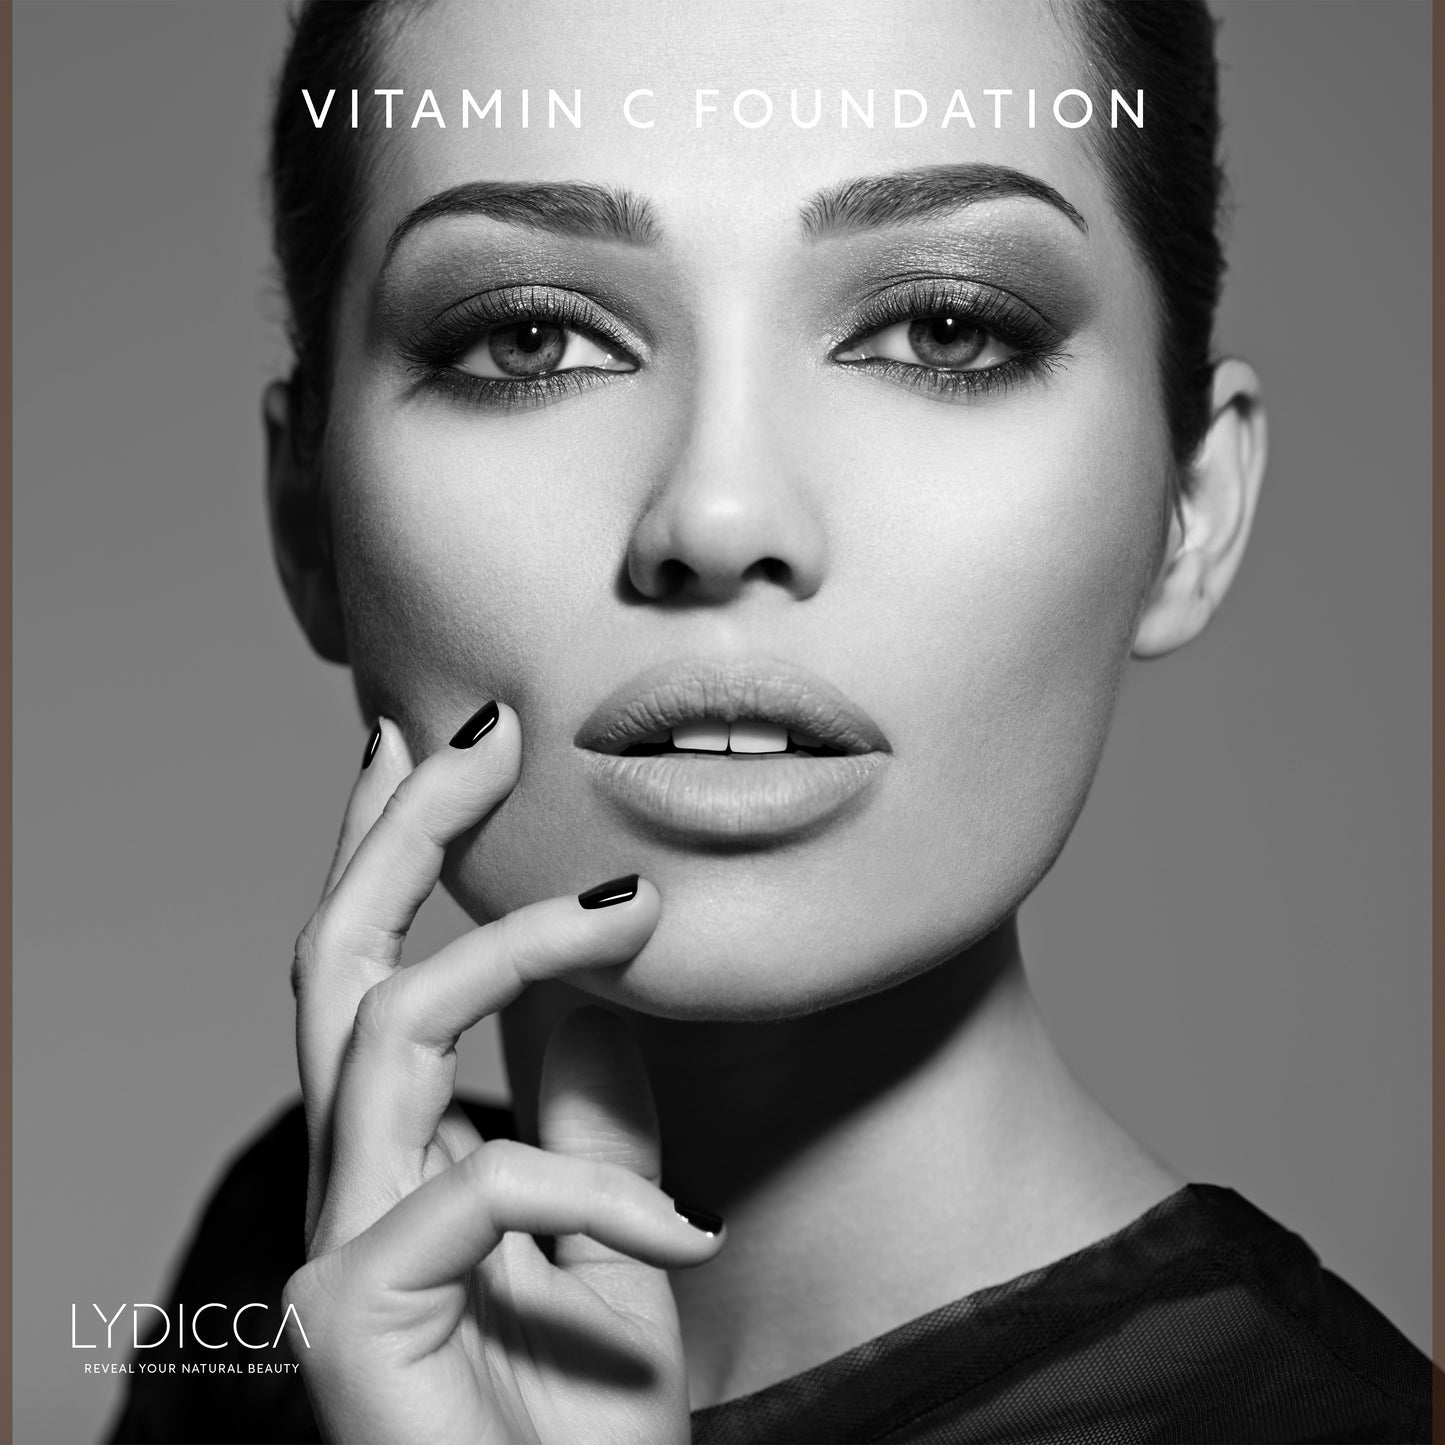 Foundation Cream with Vitamin C – Lydicca